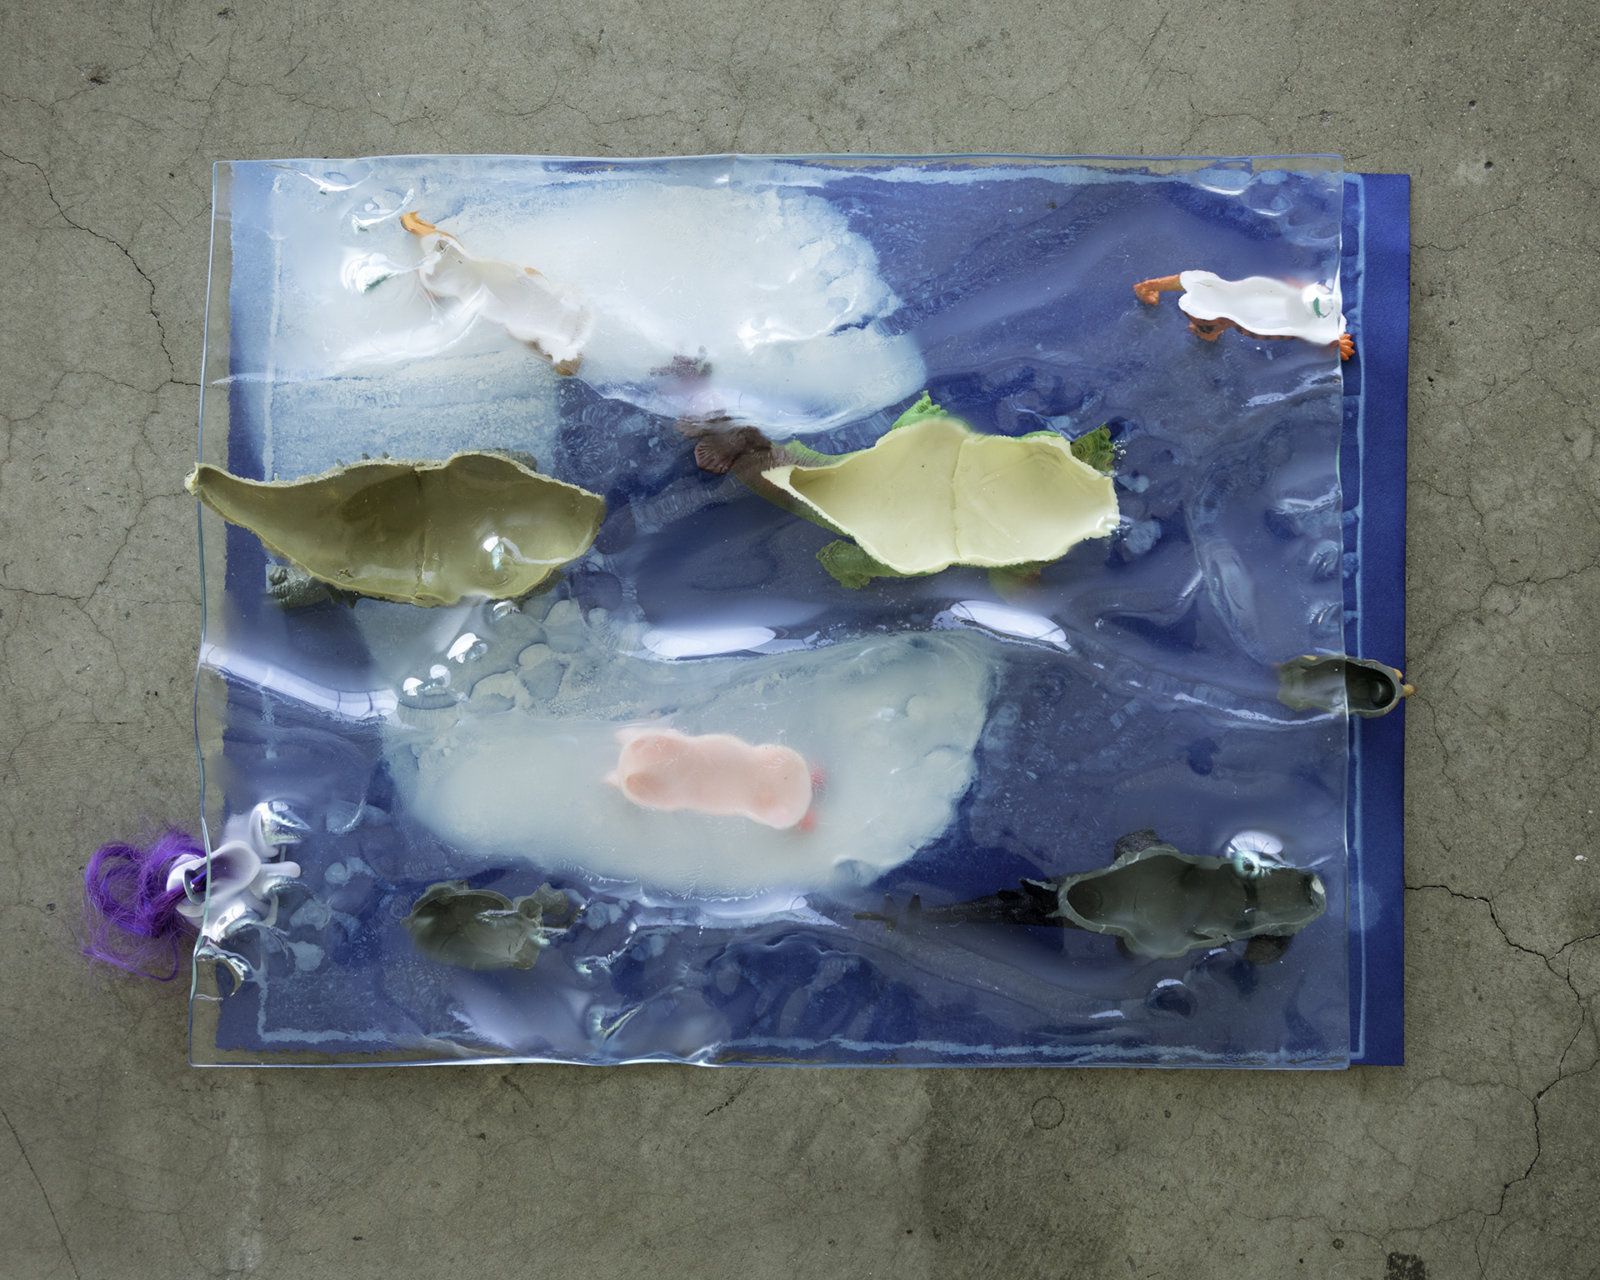 Kasper Feyrer, New Pedestrians, 2017, float glass, sunscreen, cyanotype, creatures' feet, dimensions variable